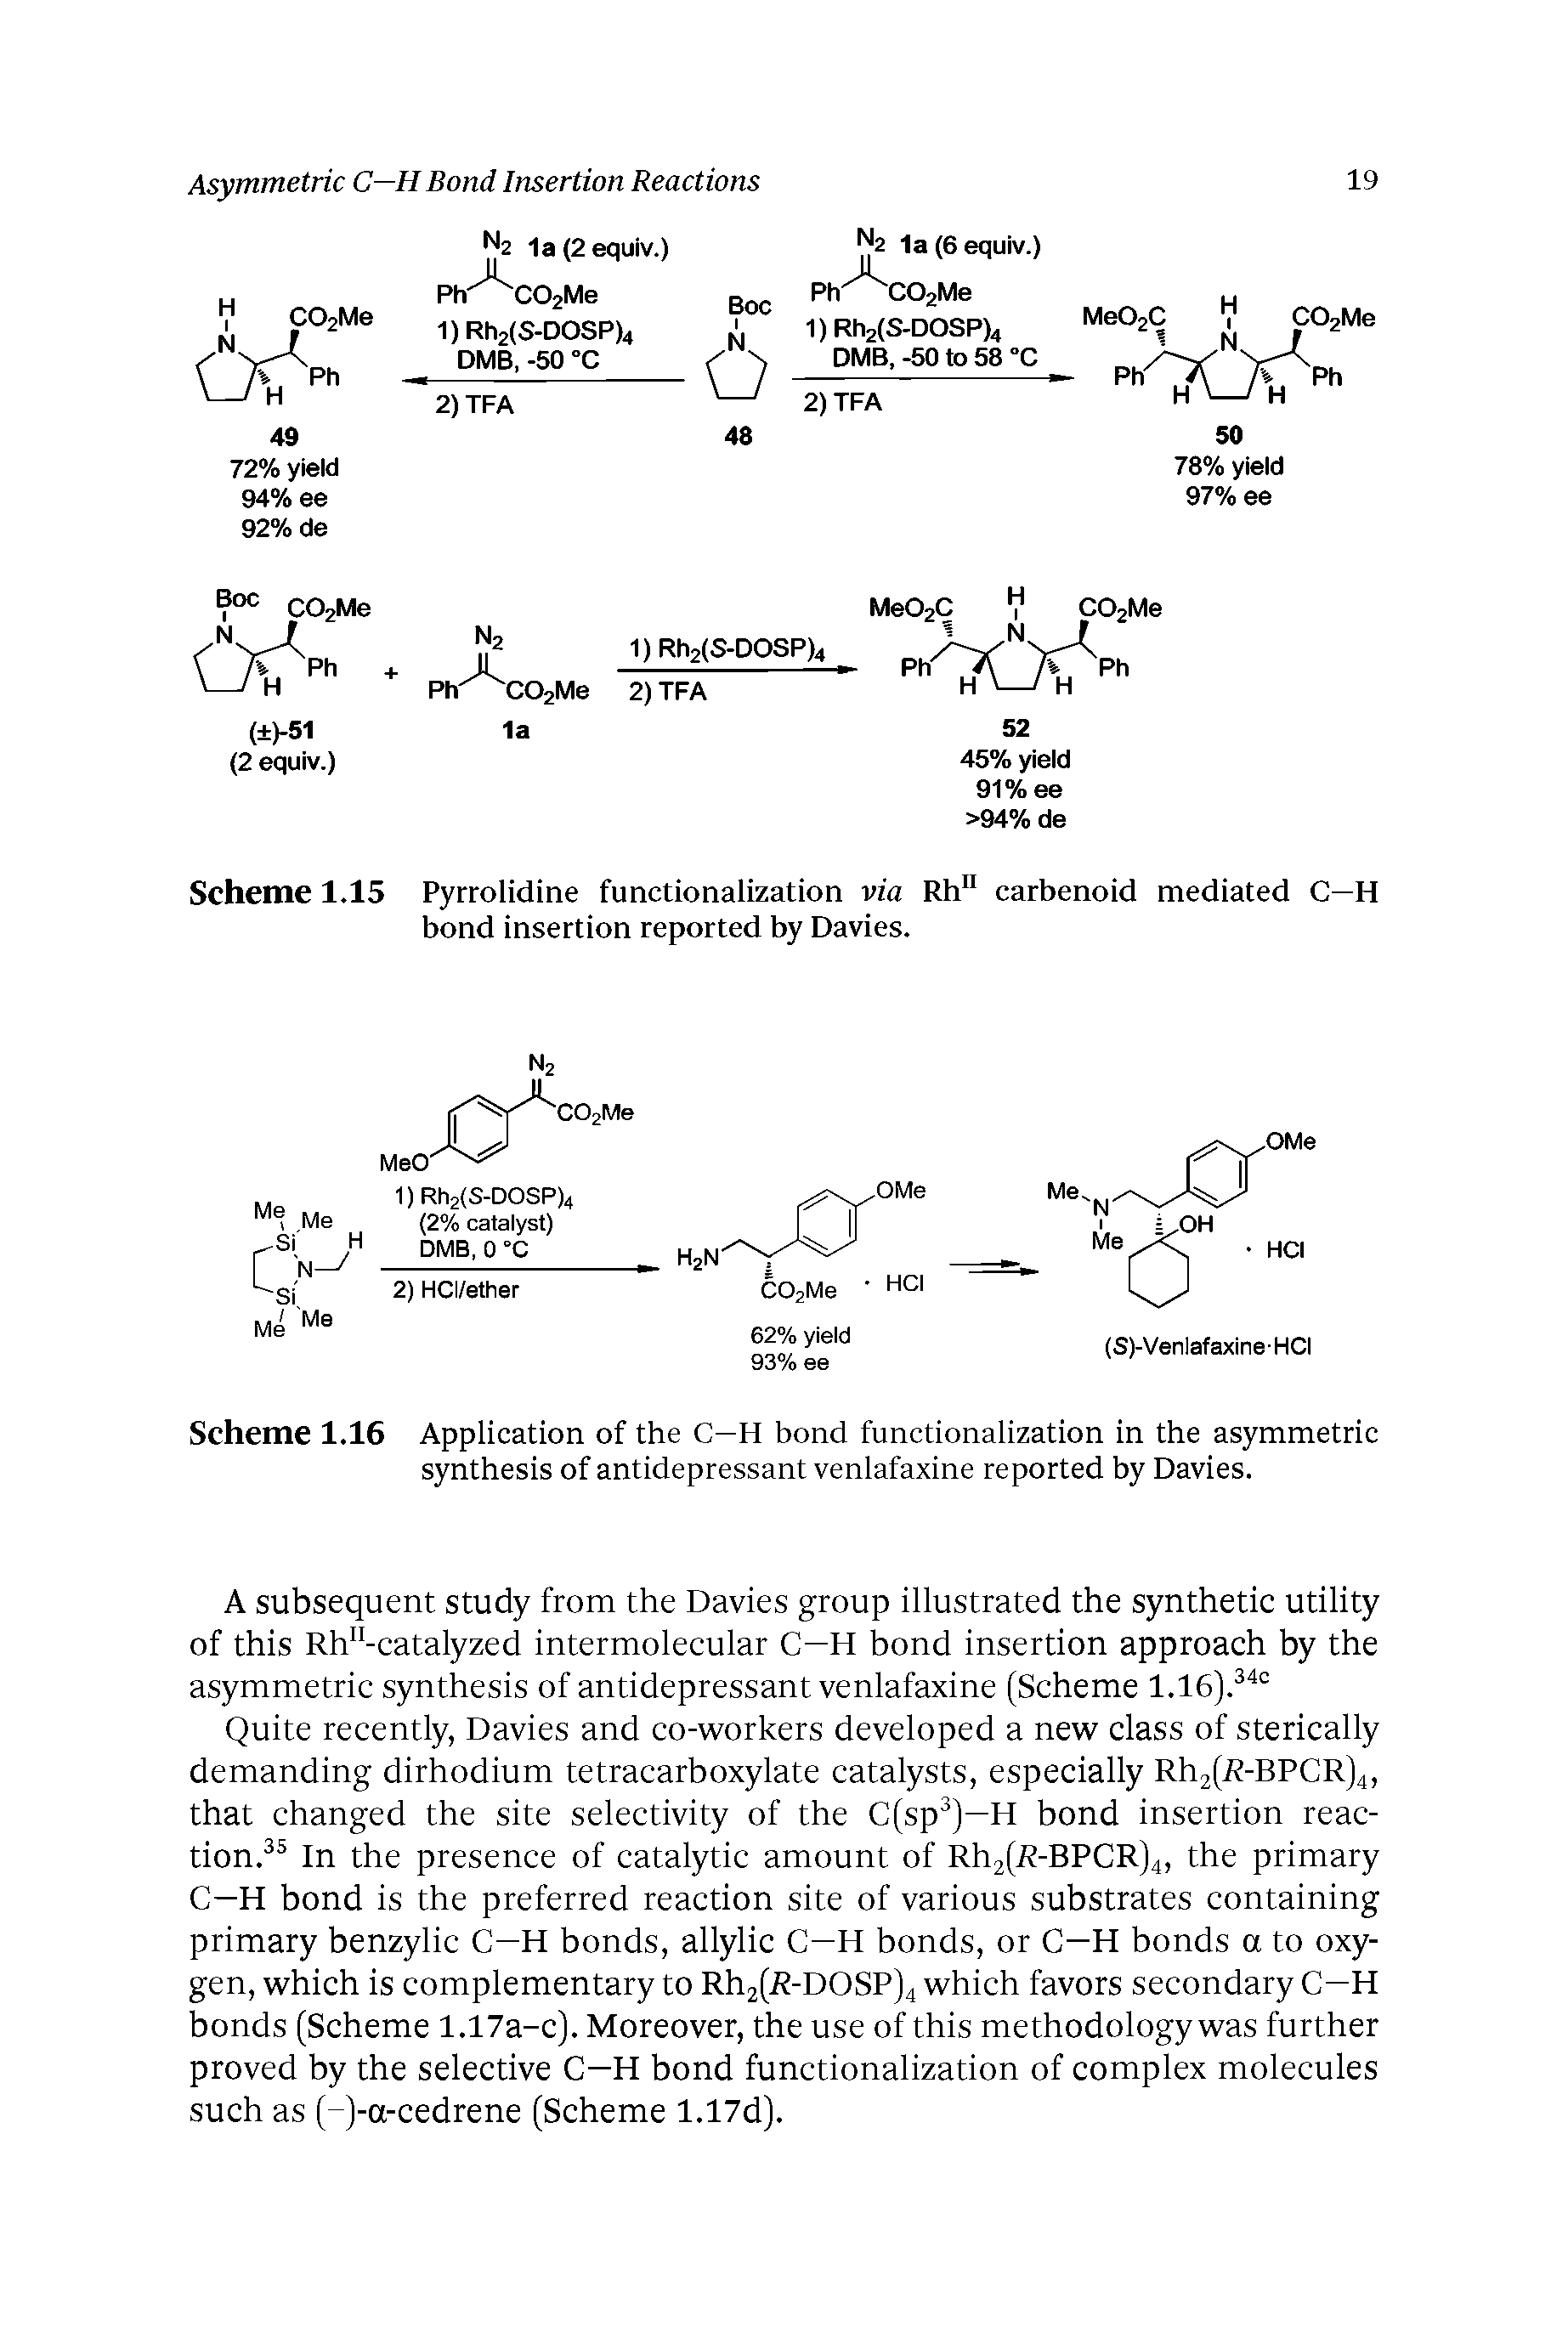 Scheme 1.15 Pyrrolidine functionalization via Rh carbenoid mediated C—H bond insertion reported by Davies.